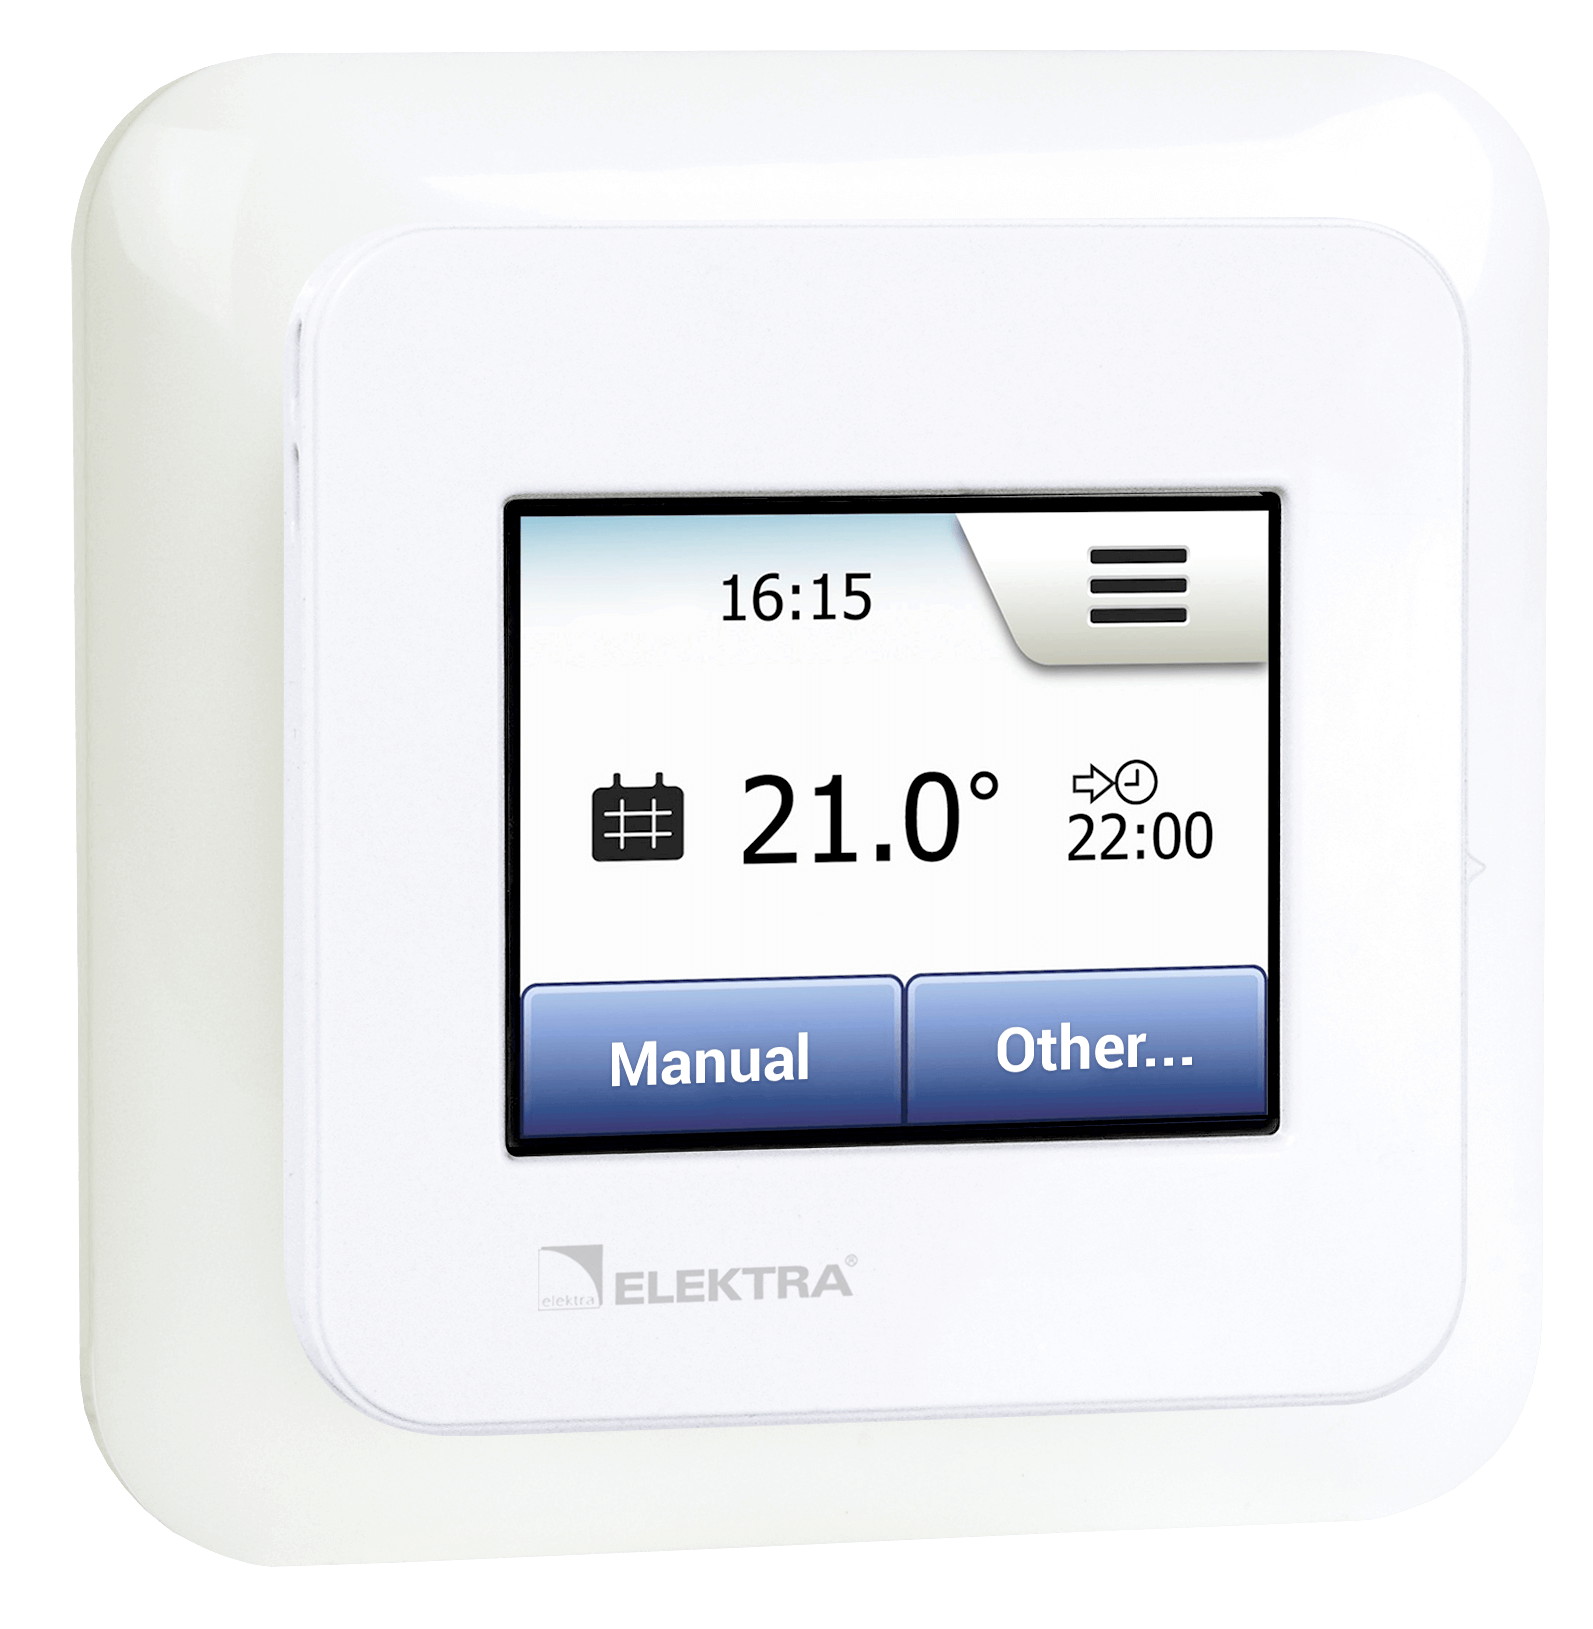 ELEKTR OCD5 1999 Thermostat - Smart Touch-Screen Heat Controller